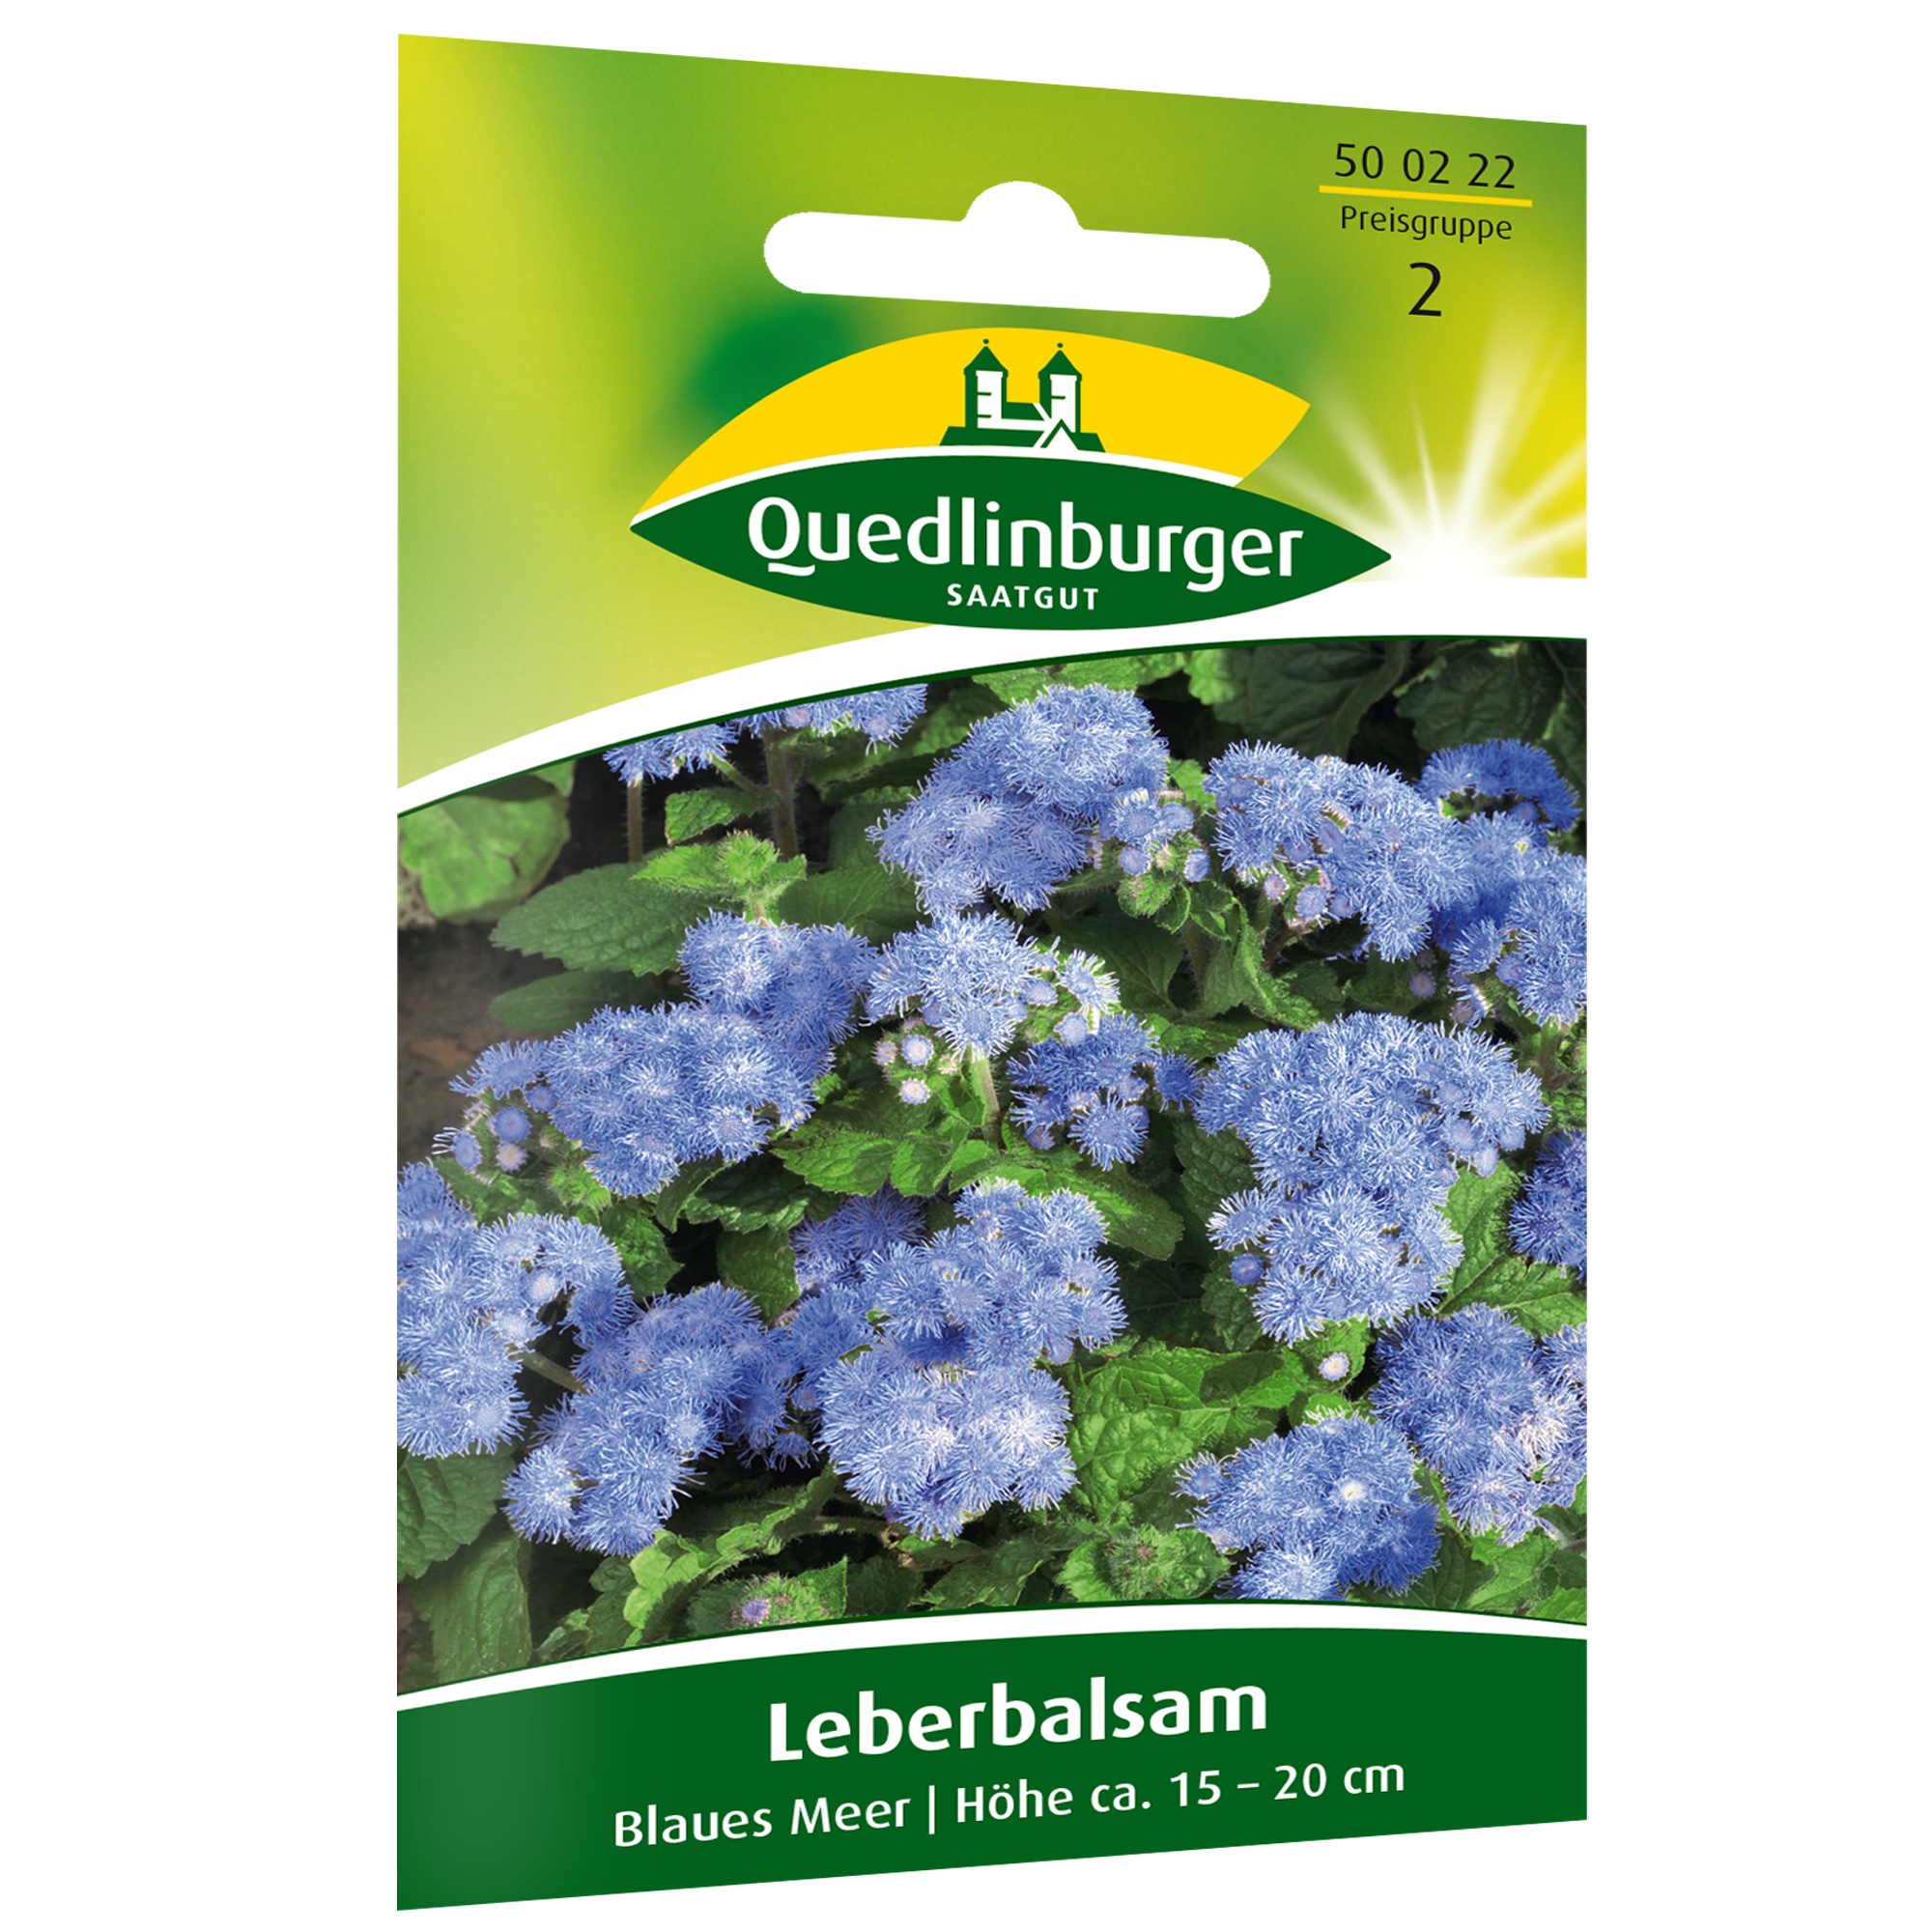 Leberbalsam 'Blaues Meer' + product picture